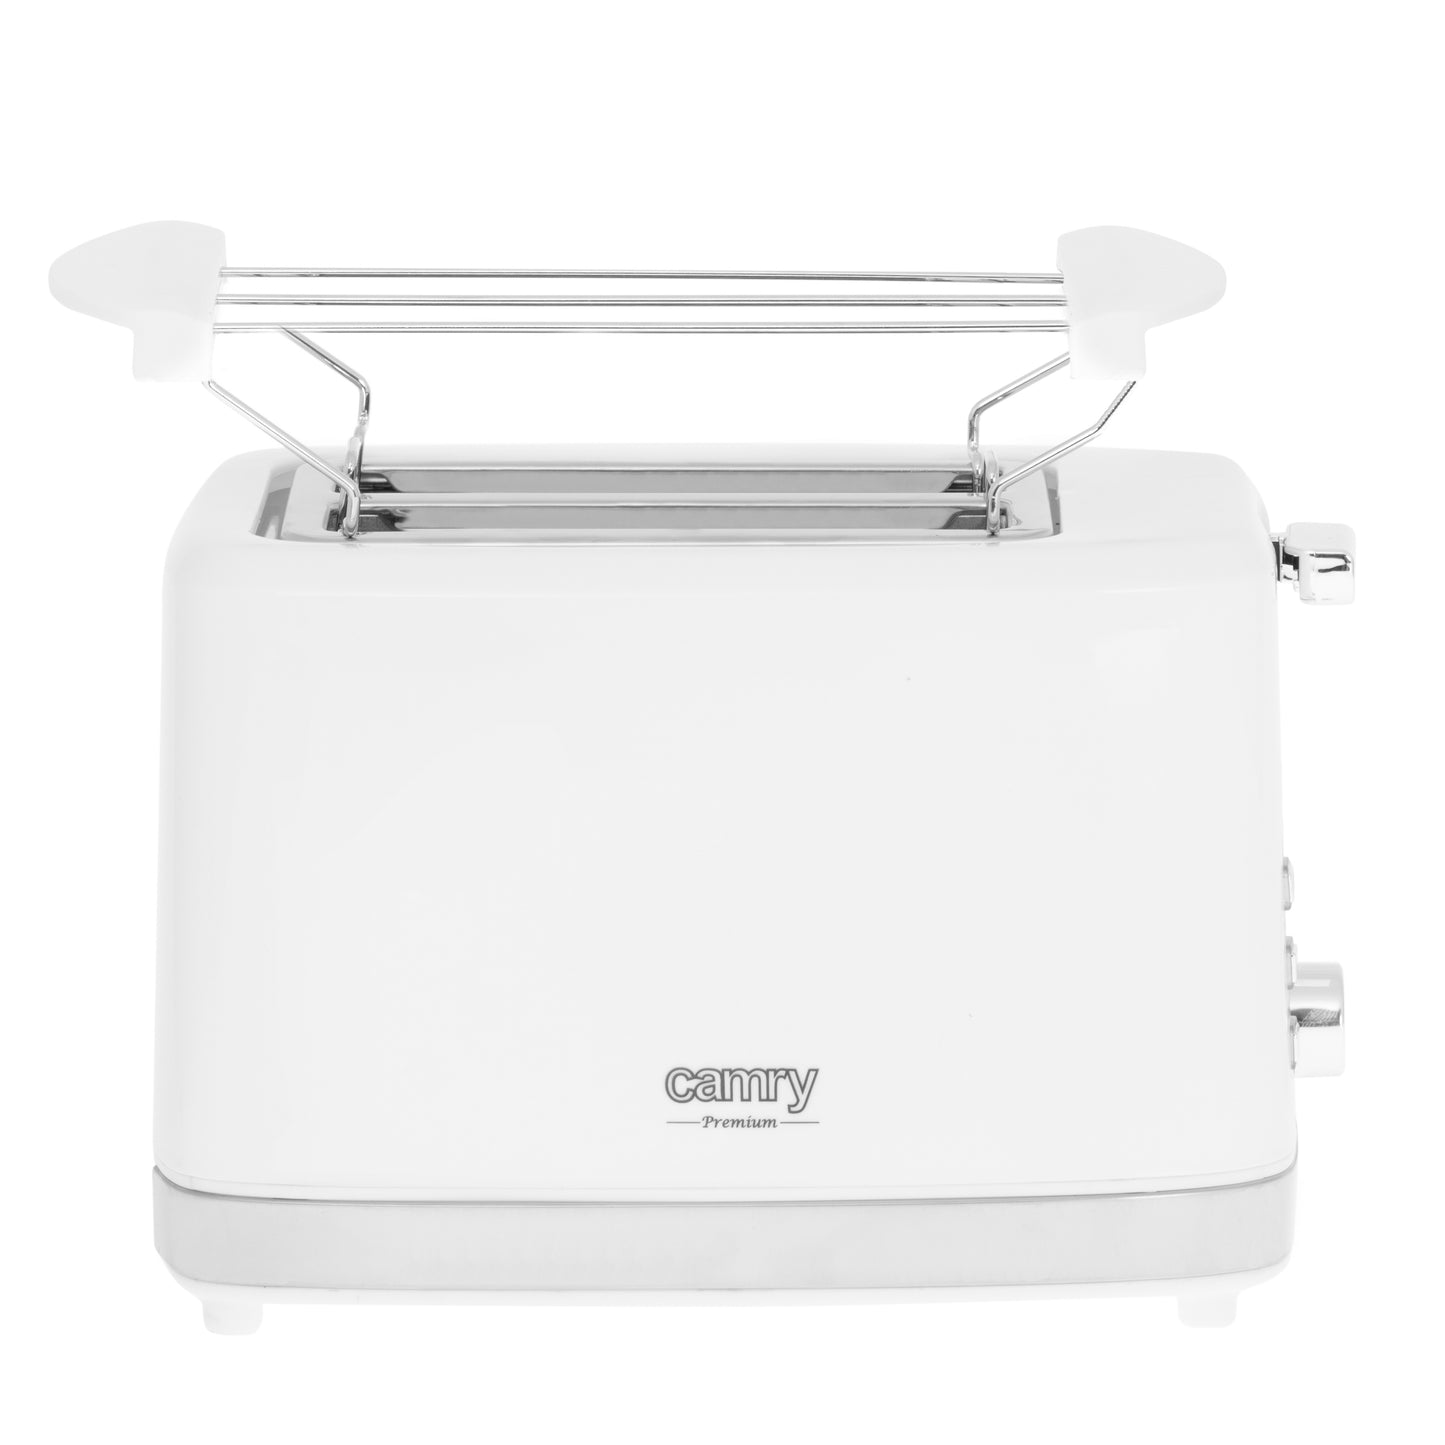 2 slice toaster CAMRY CR3219 (900w)